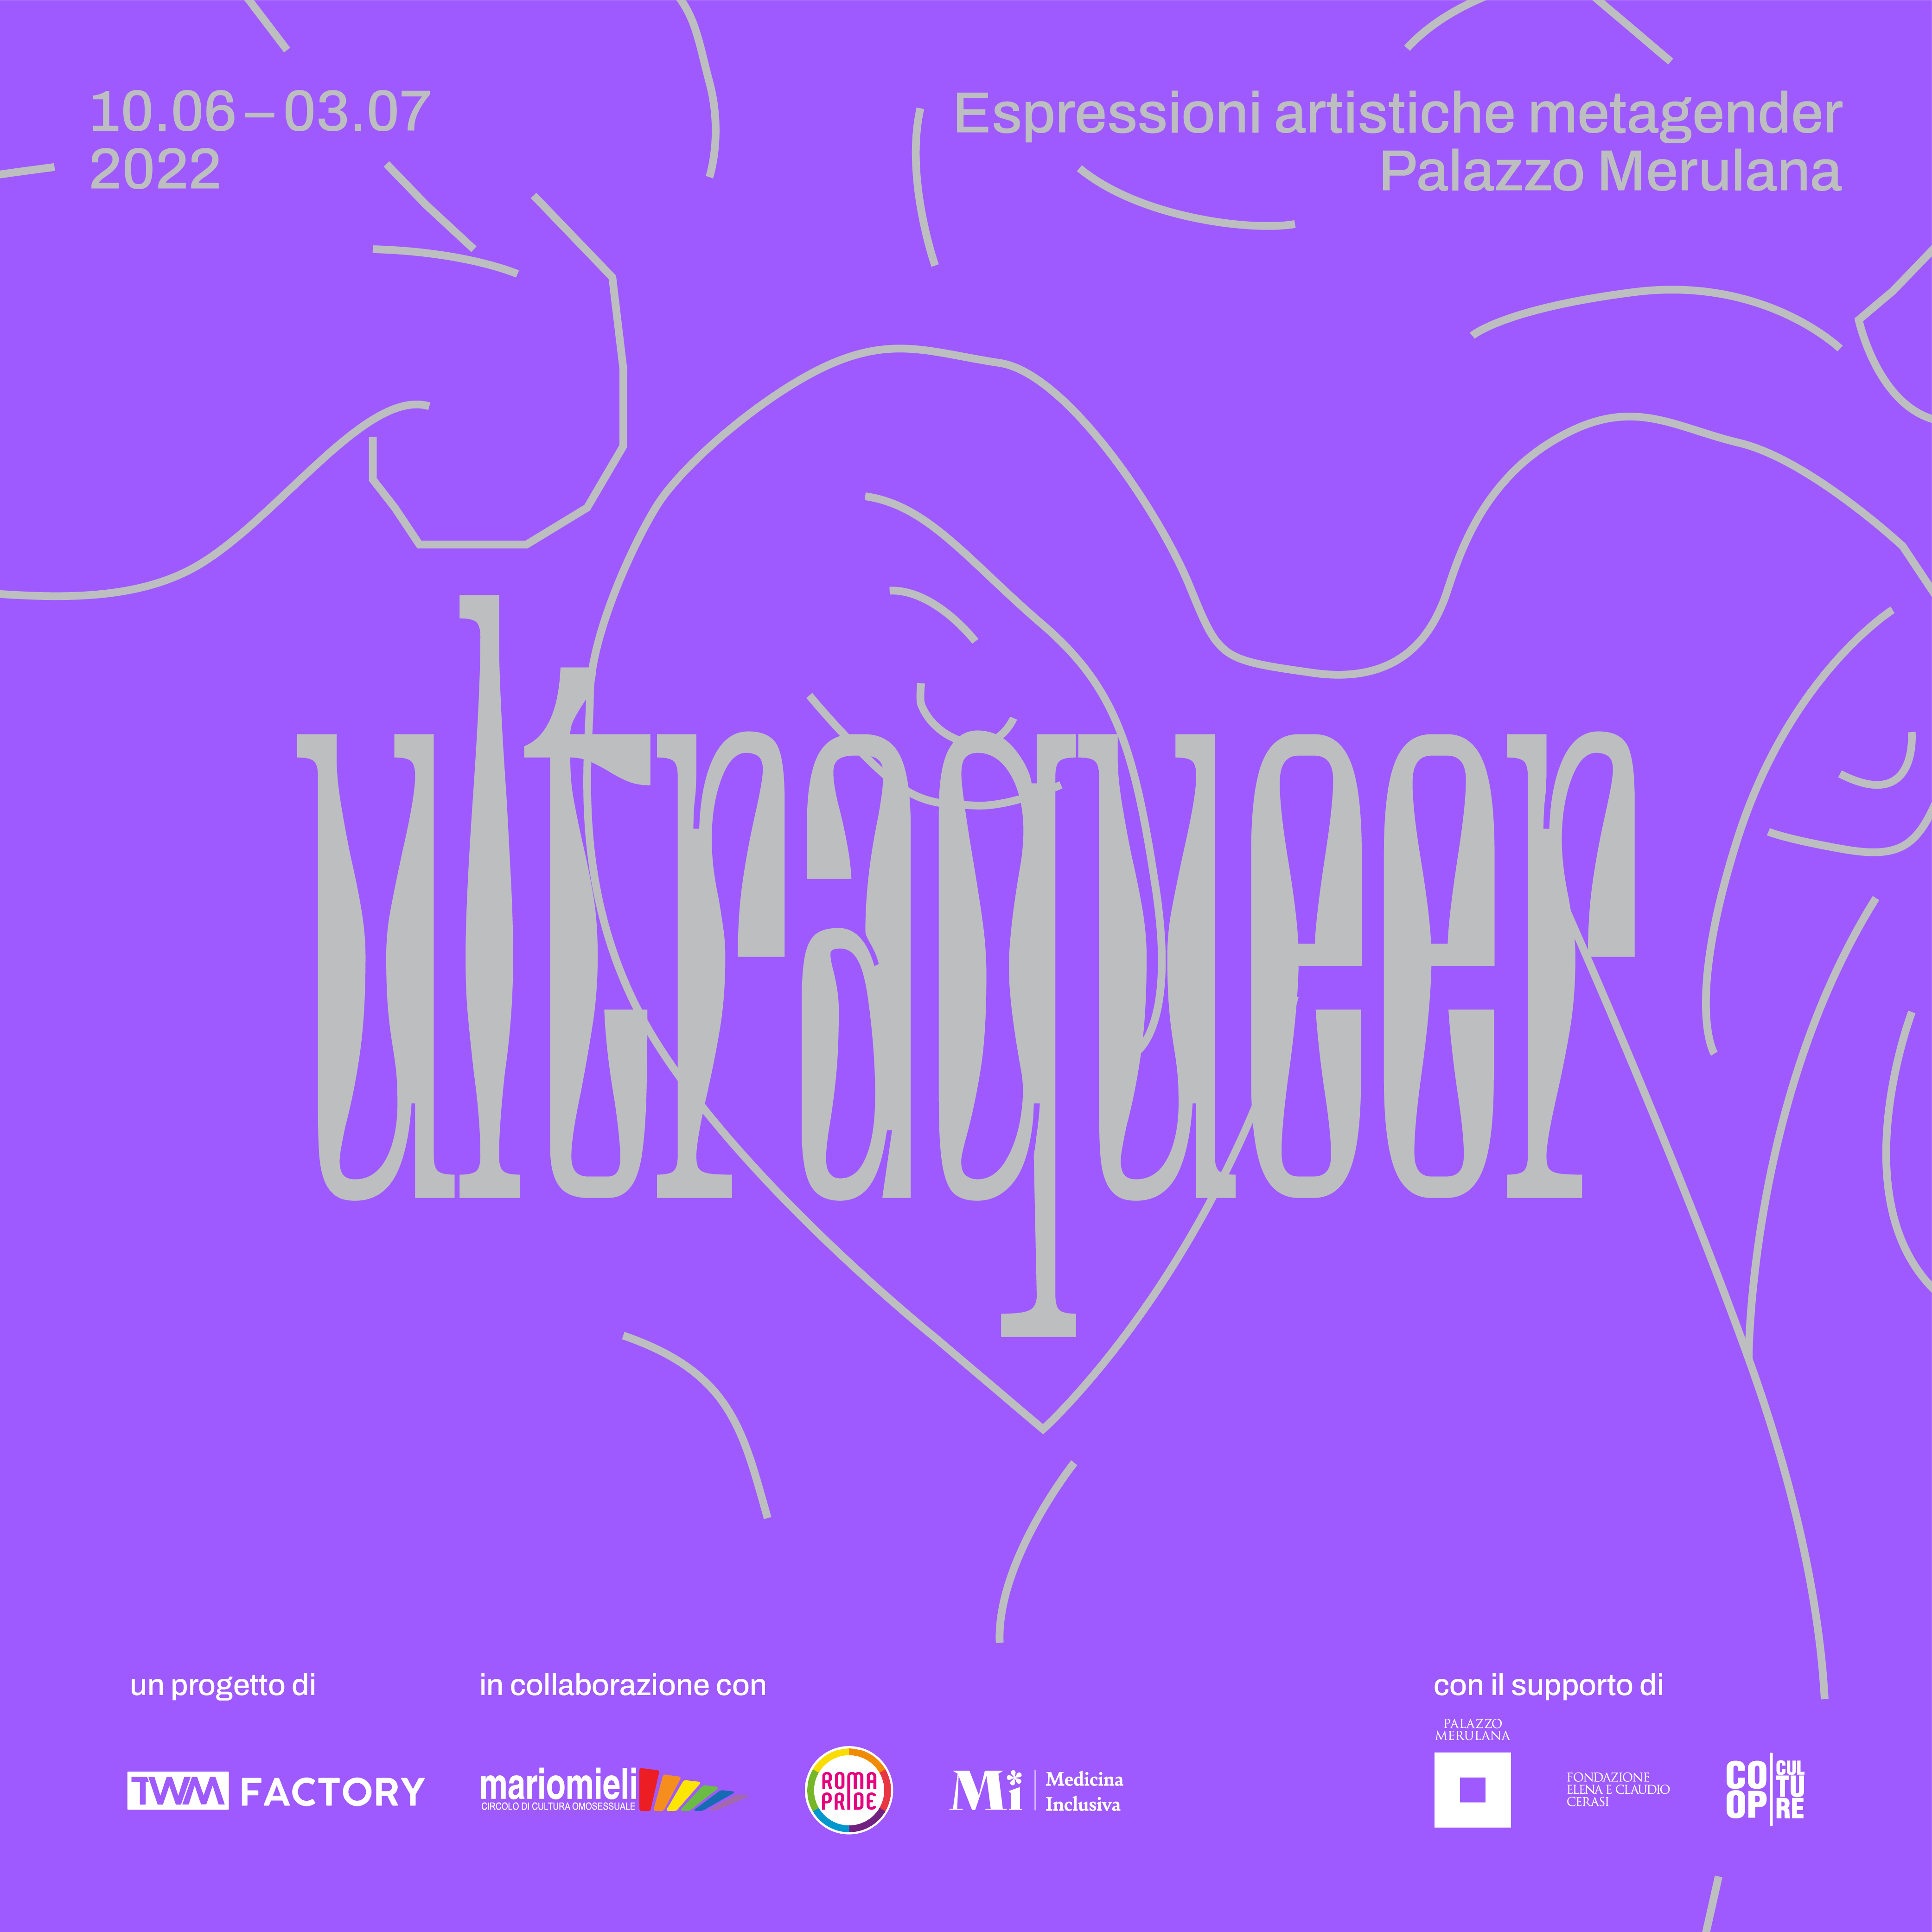 Ultraqueer - Espressioni artistiche metagender